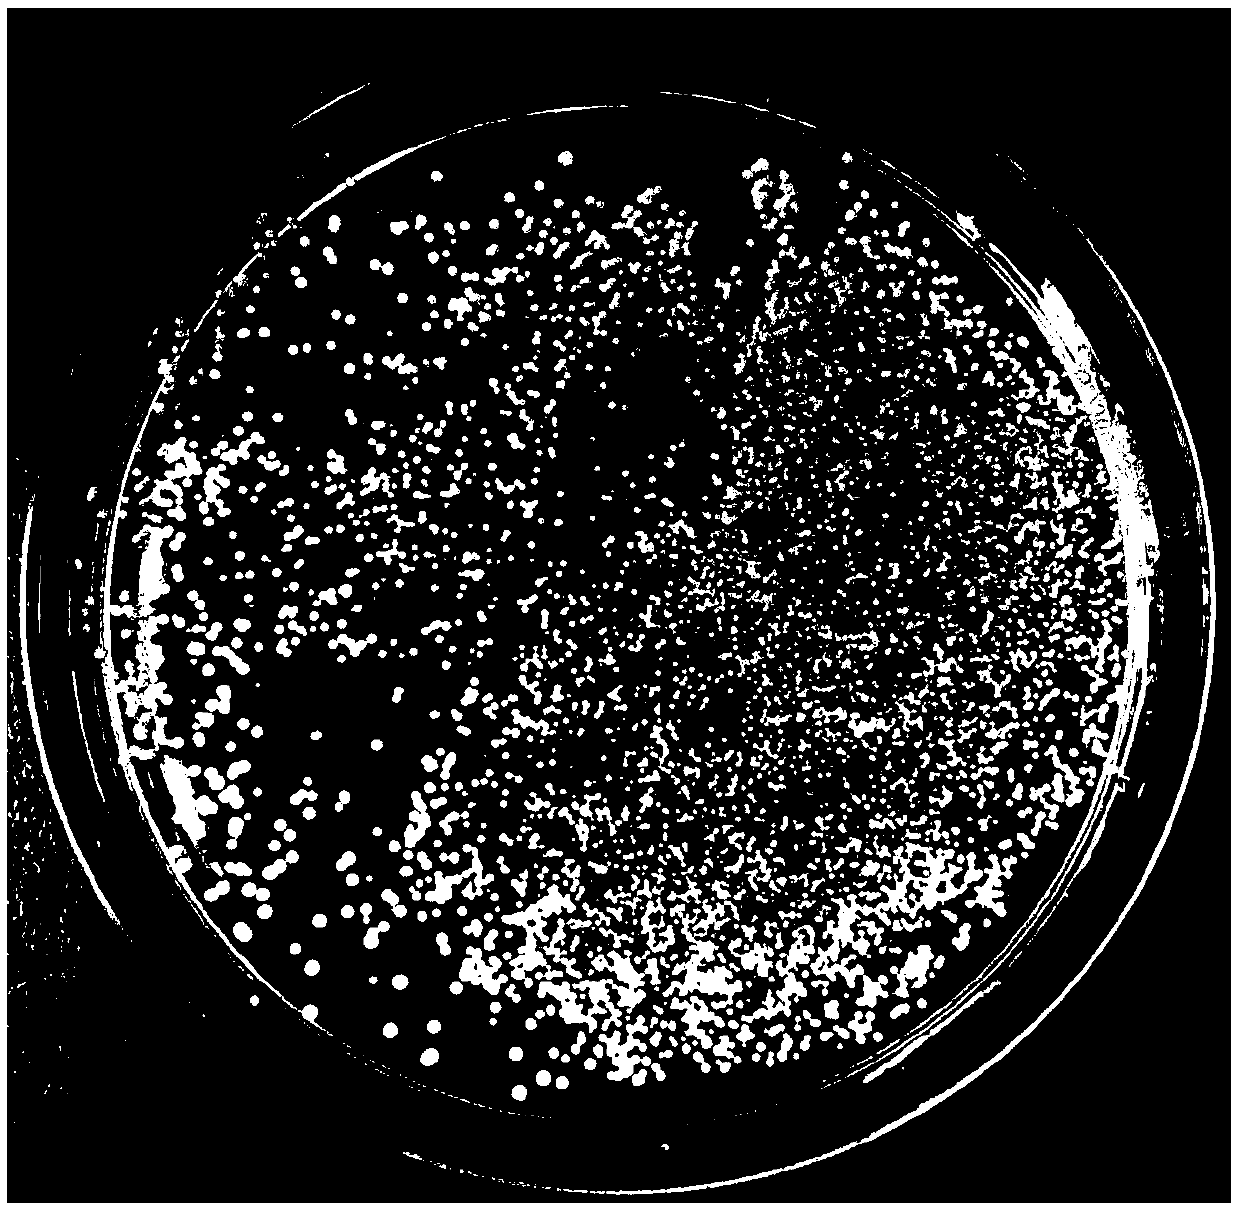 Method for preparing gram-negative bacterium competent cells through outer membrane defects